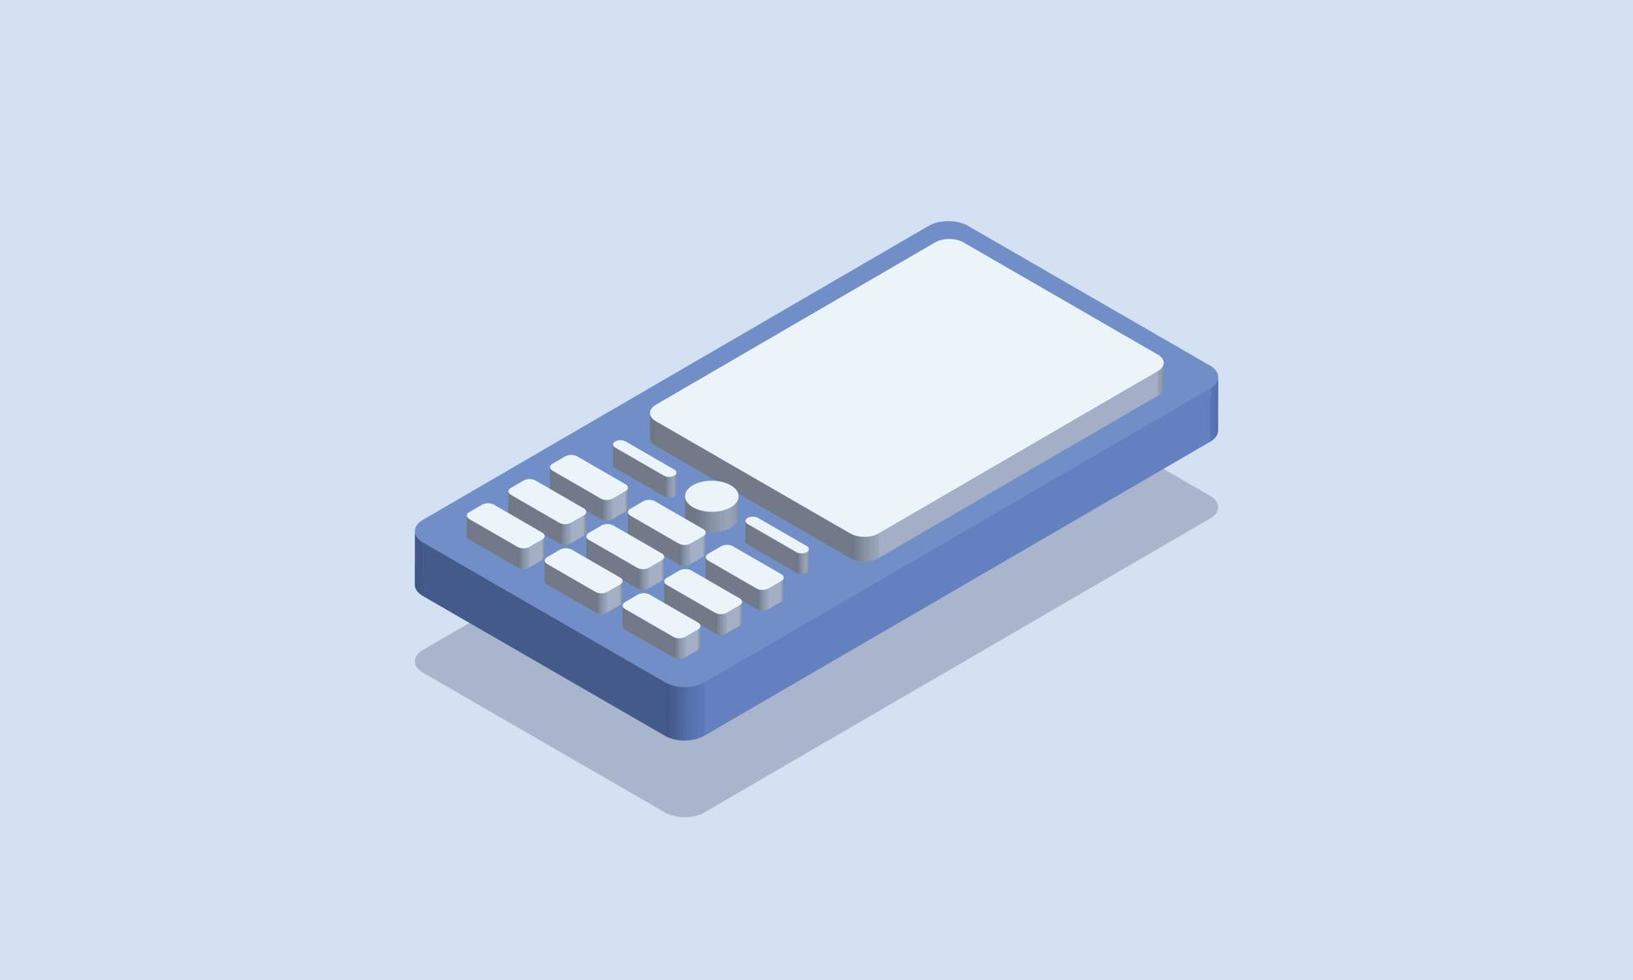 blå telefon enkel isometrisk ikon för grej relaterad design element. klassisk mobiltelefon med knapp design. vektor